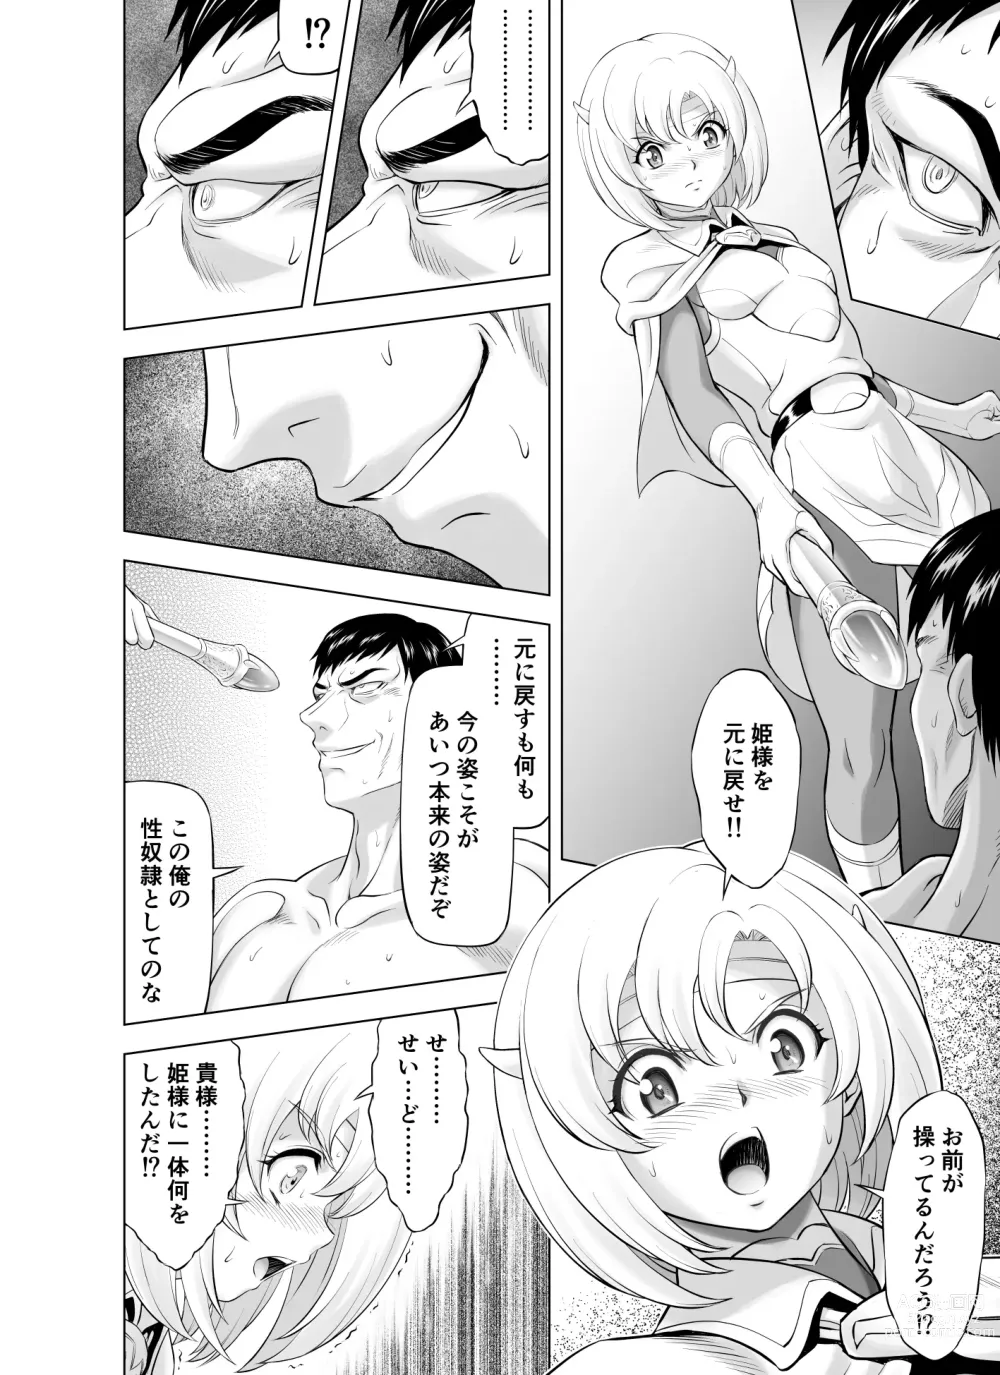 Page 18 of doujinshi Reties no Michibiki Vol. 9